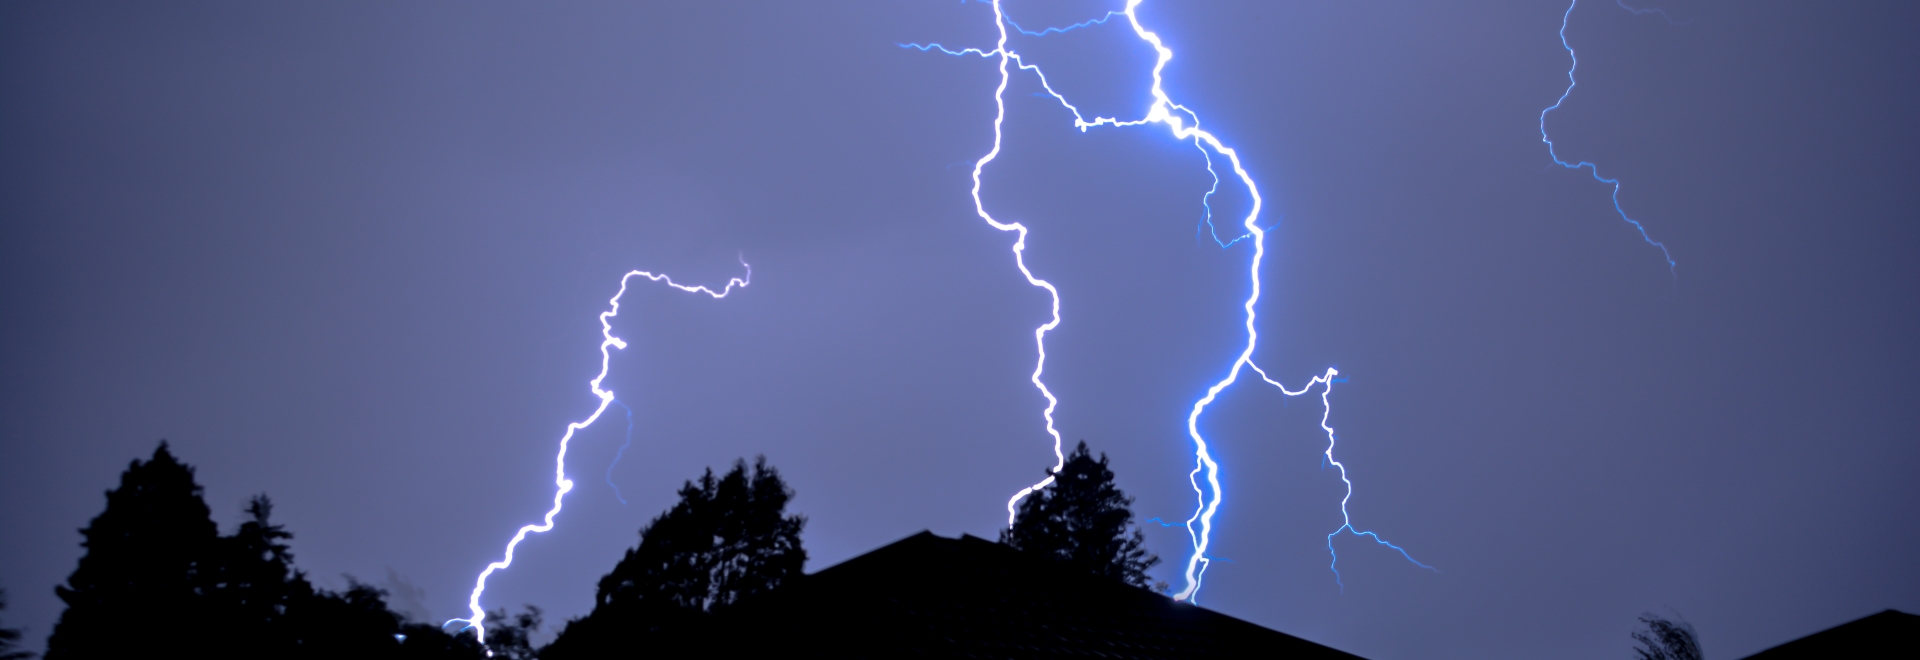 Lightning Storm Behind Home